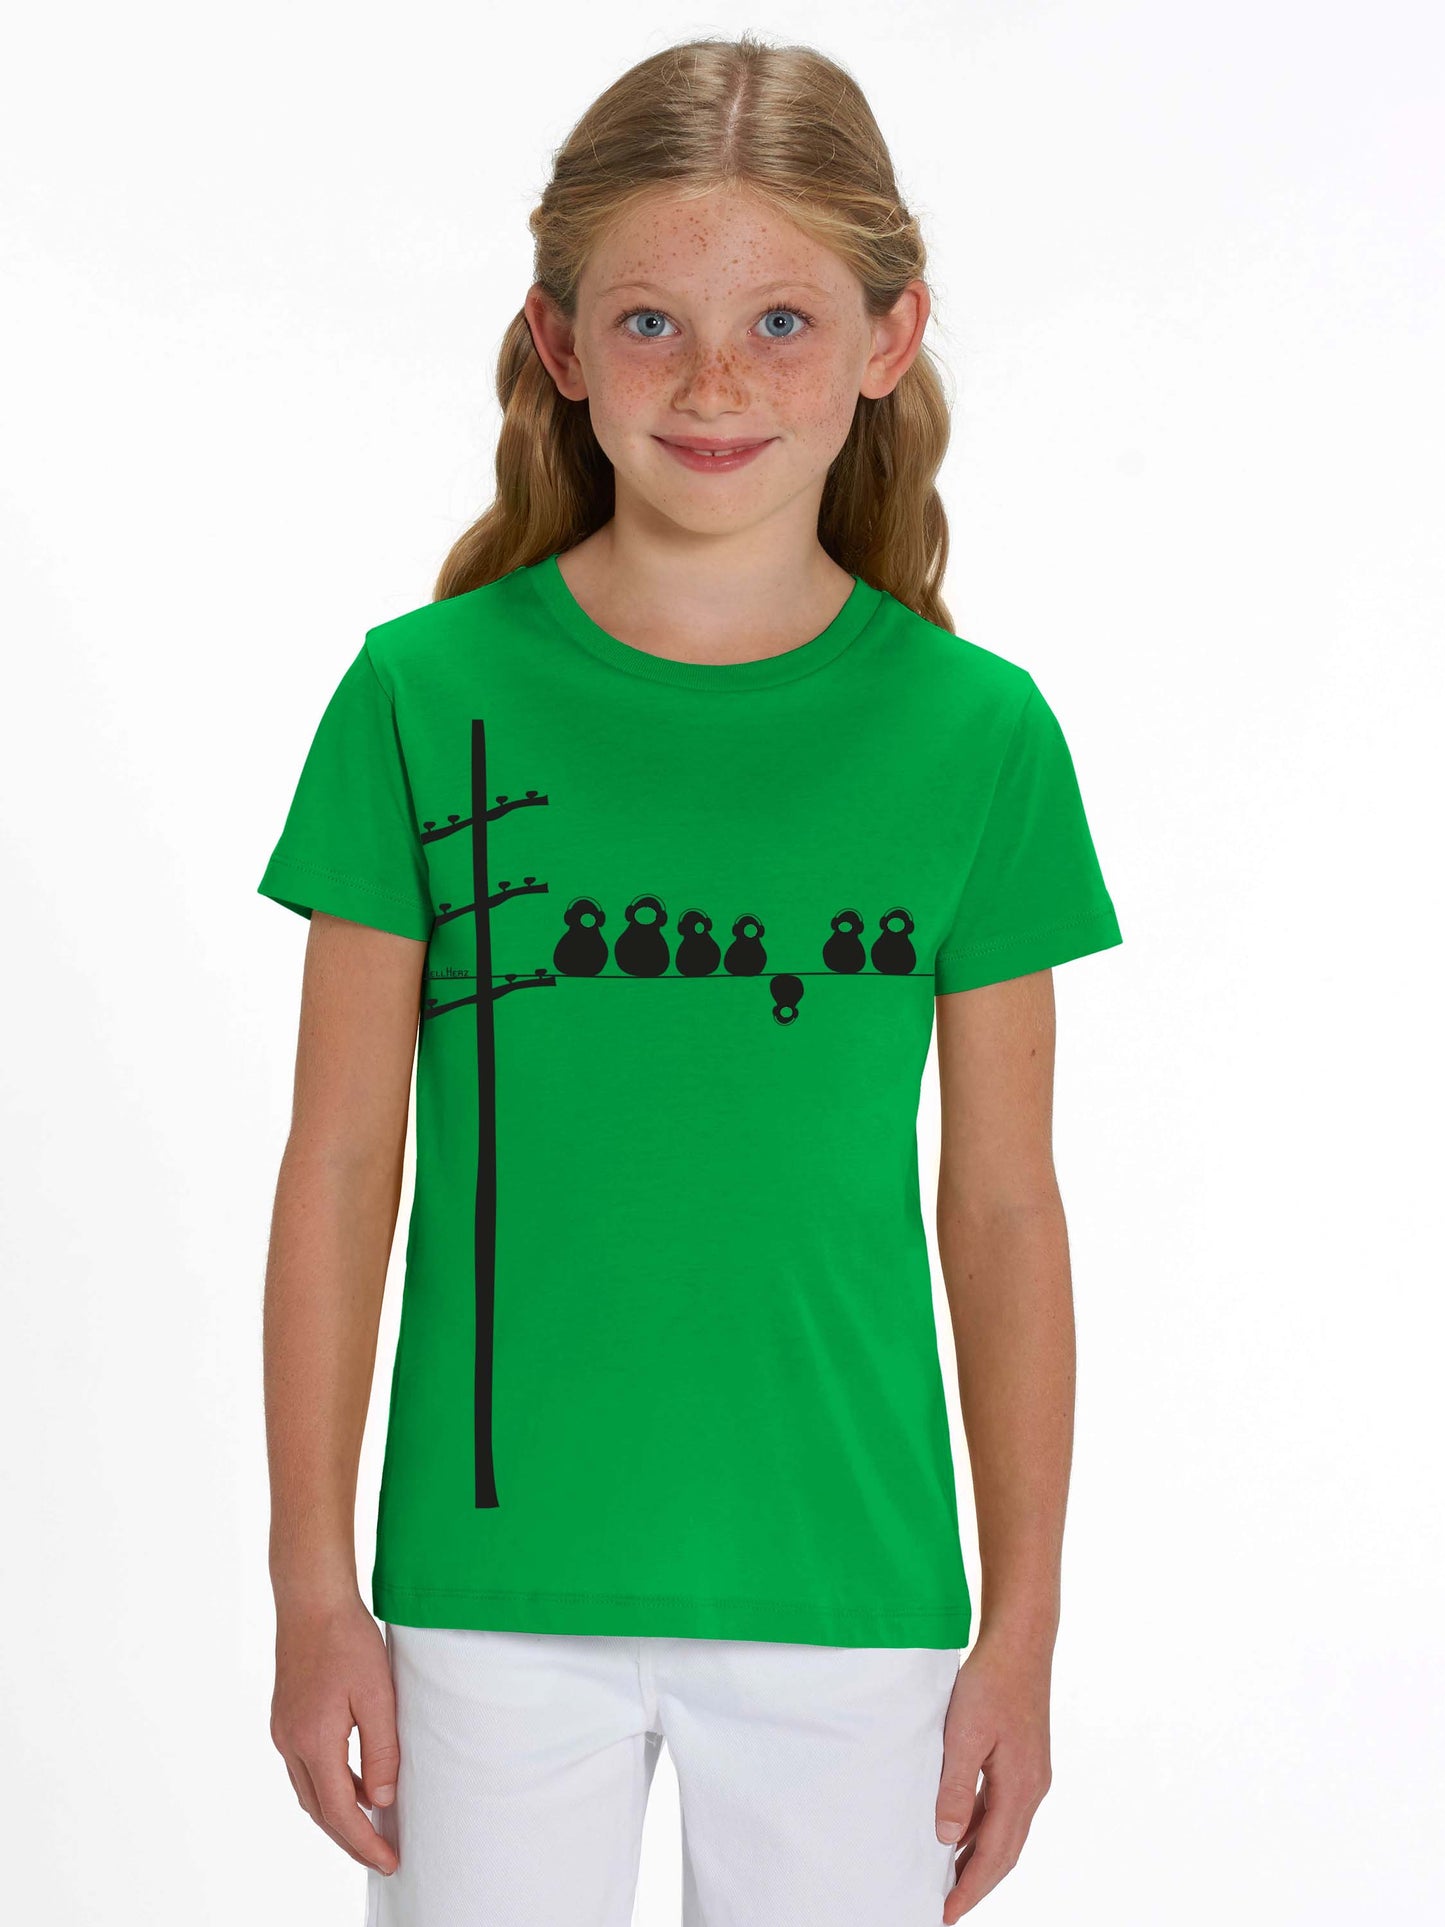 Make some noise Kids T-Shirt fresh green